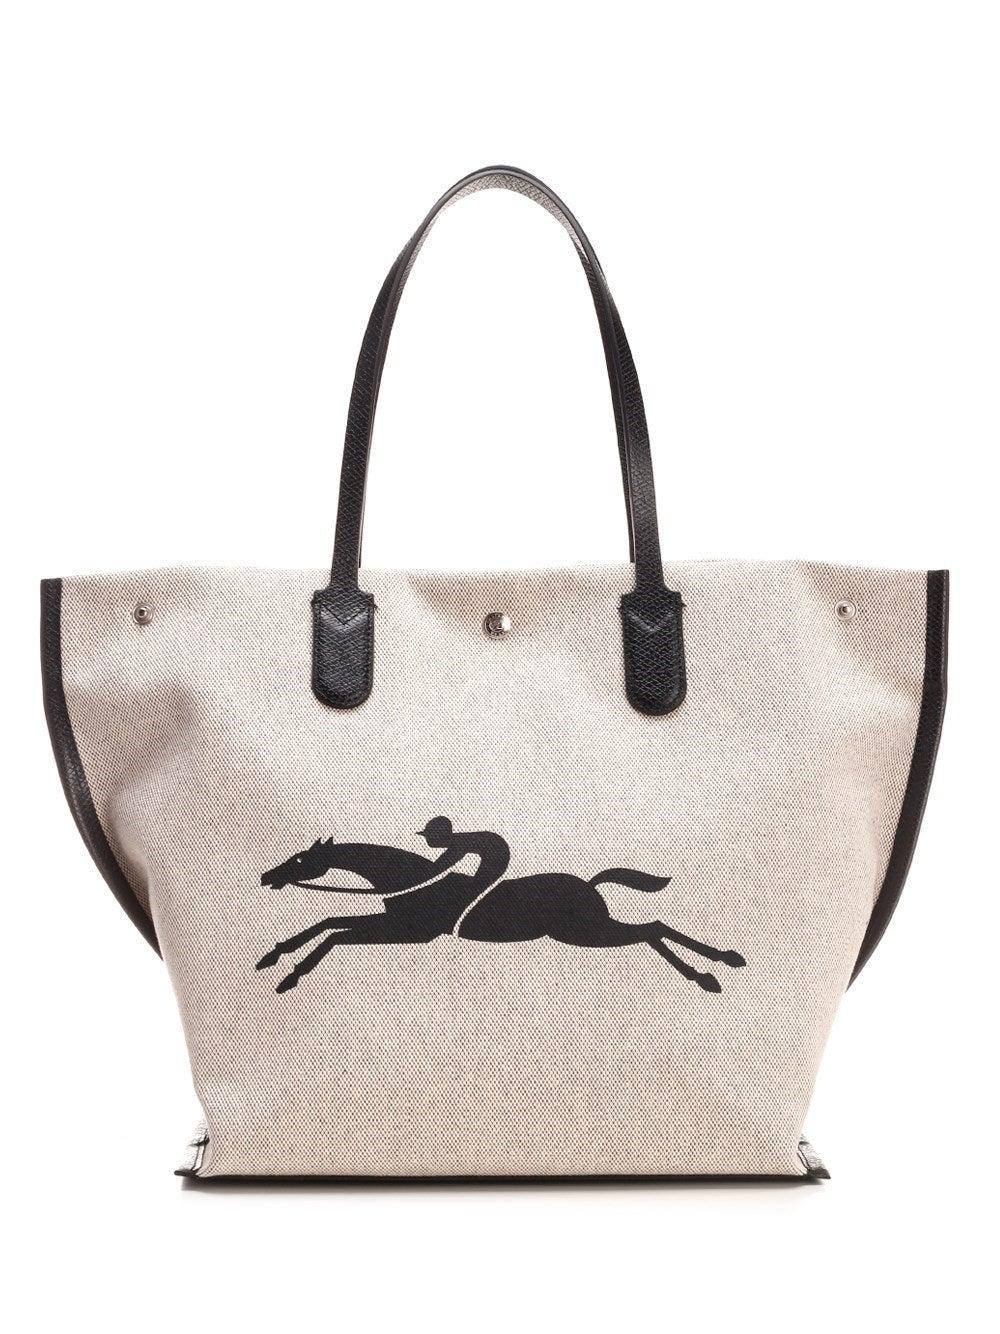 Longchamp Roseau Shopping Tote Bag in White | Lyst